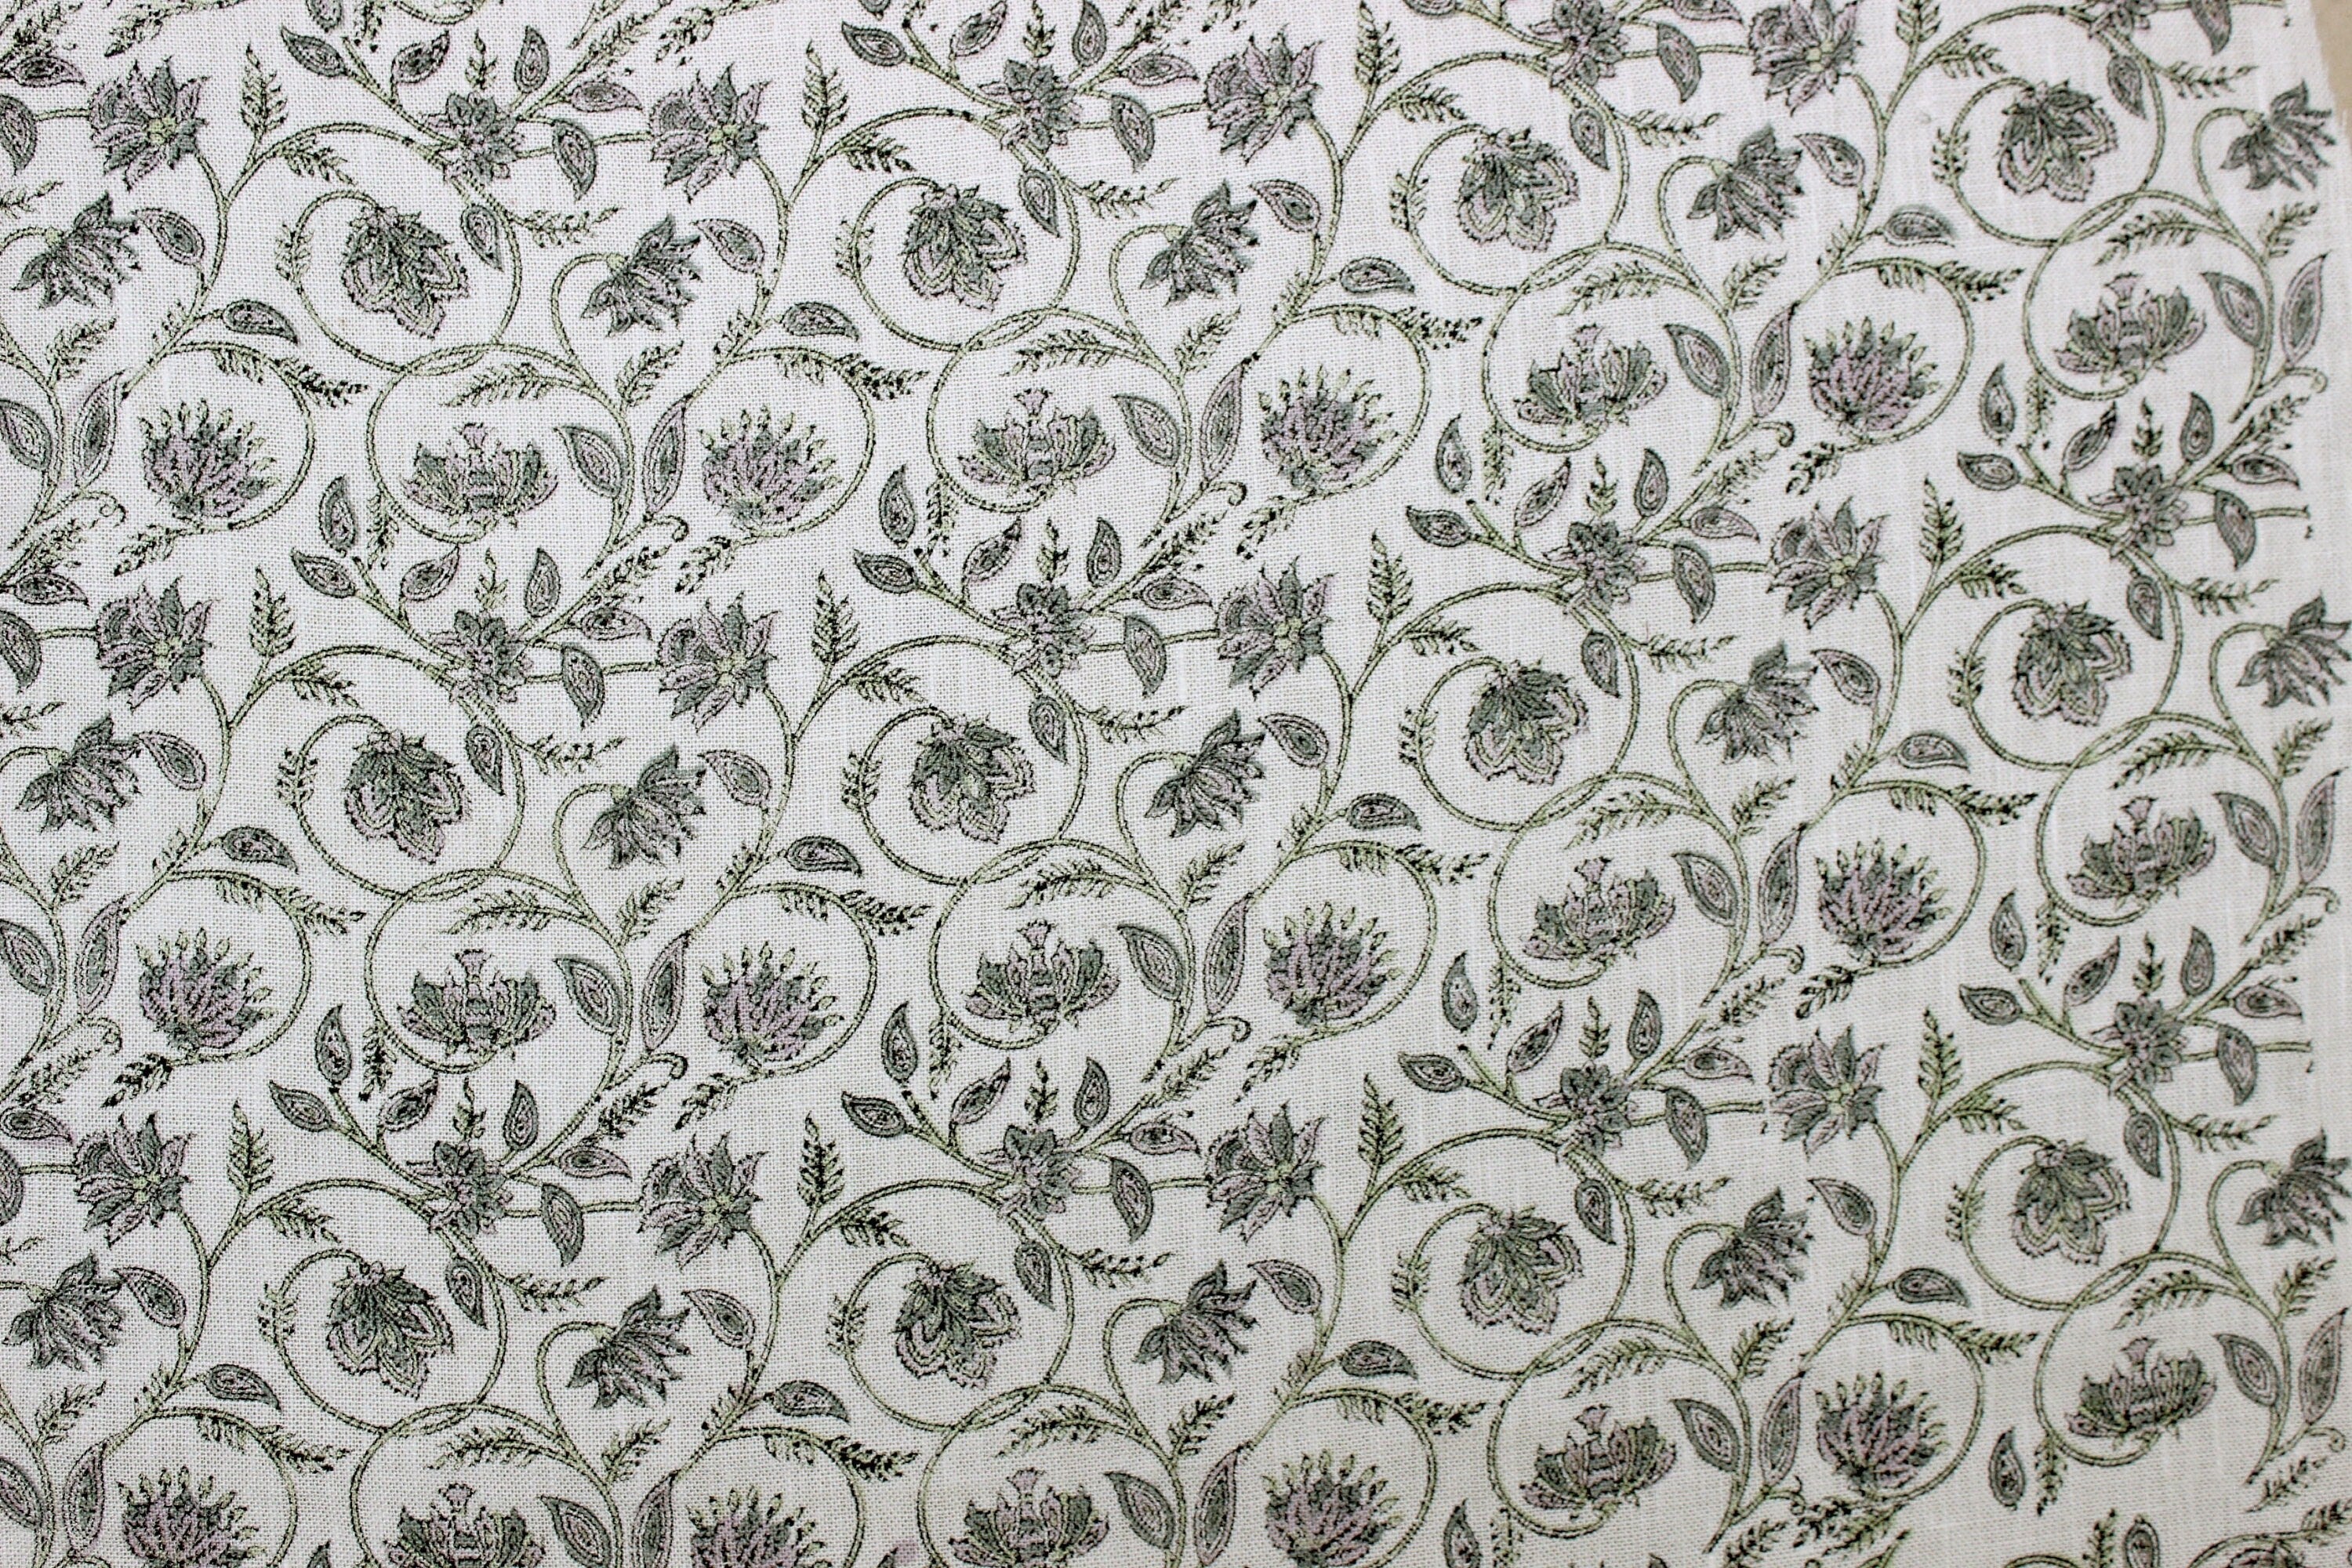 Block Print Linen Fabric, Kurukshetra  Hand Blocked Linen Fabric,Indian Block Print Heavy Natural Fabrics For Pillow Cases, Handloom Upholstery Fabric